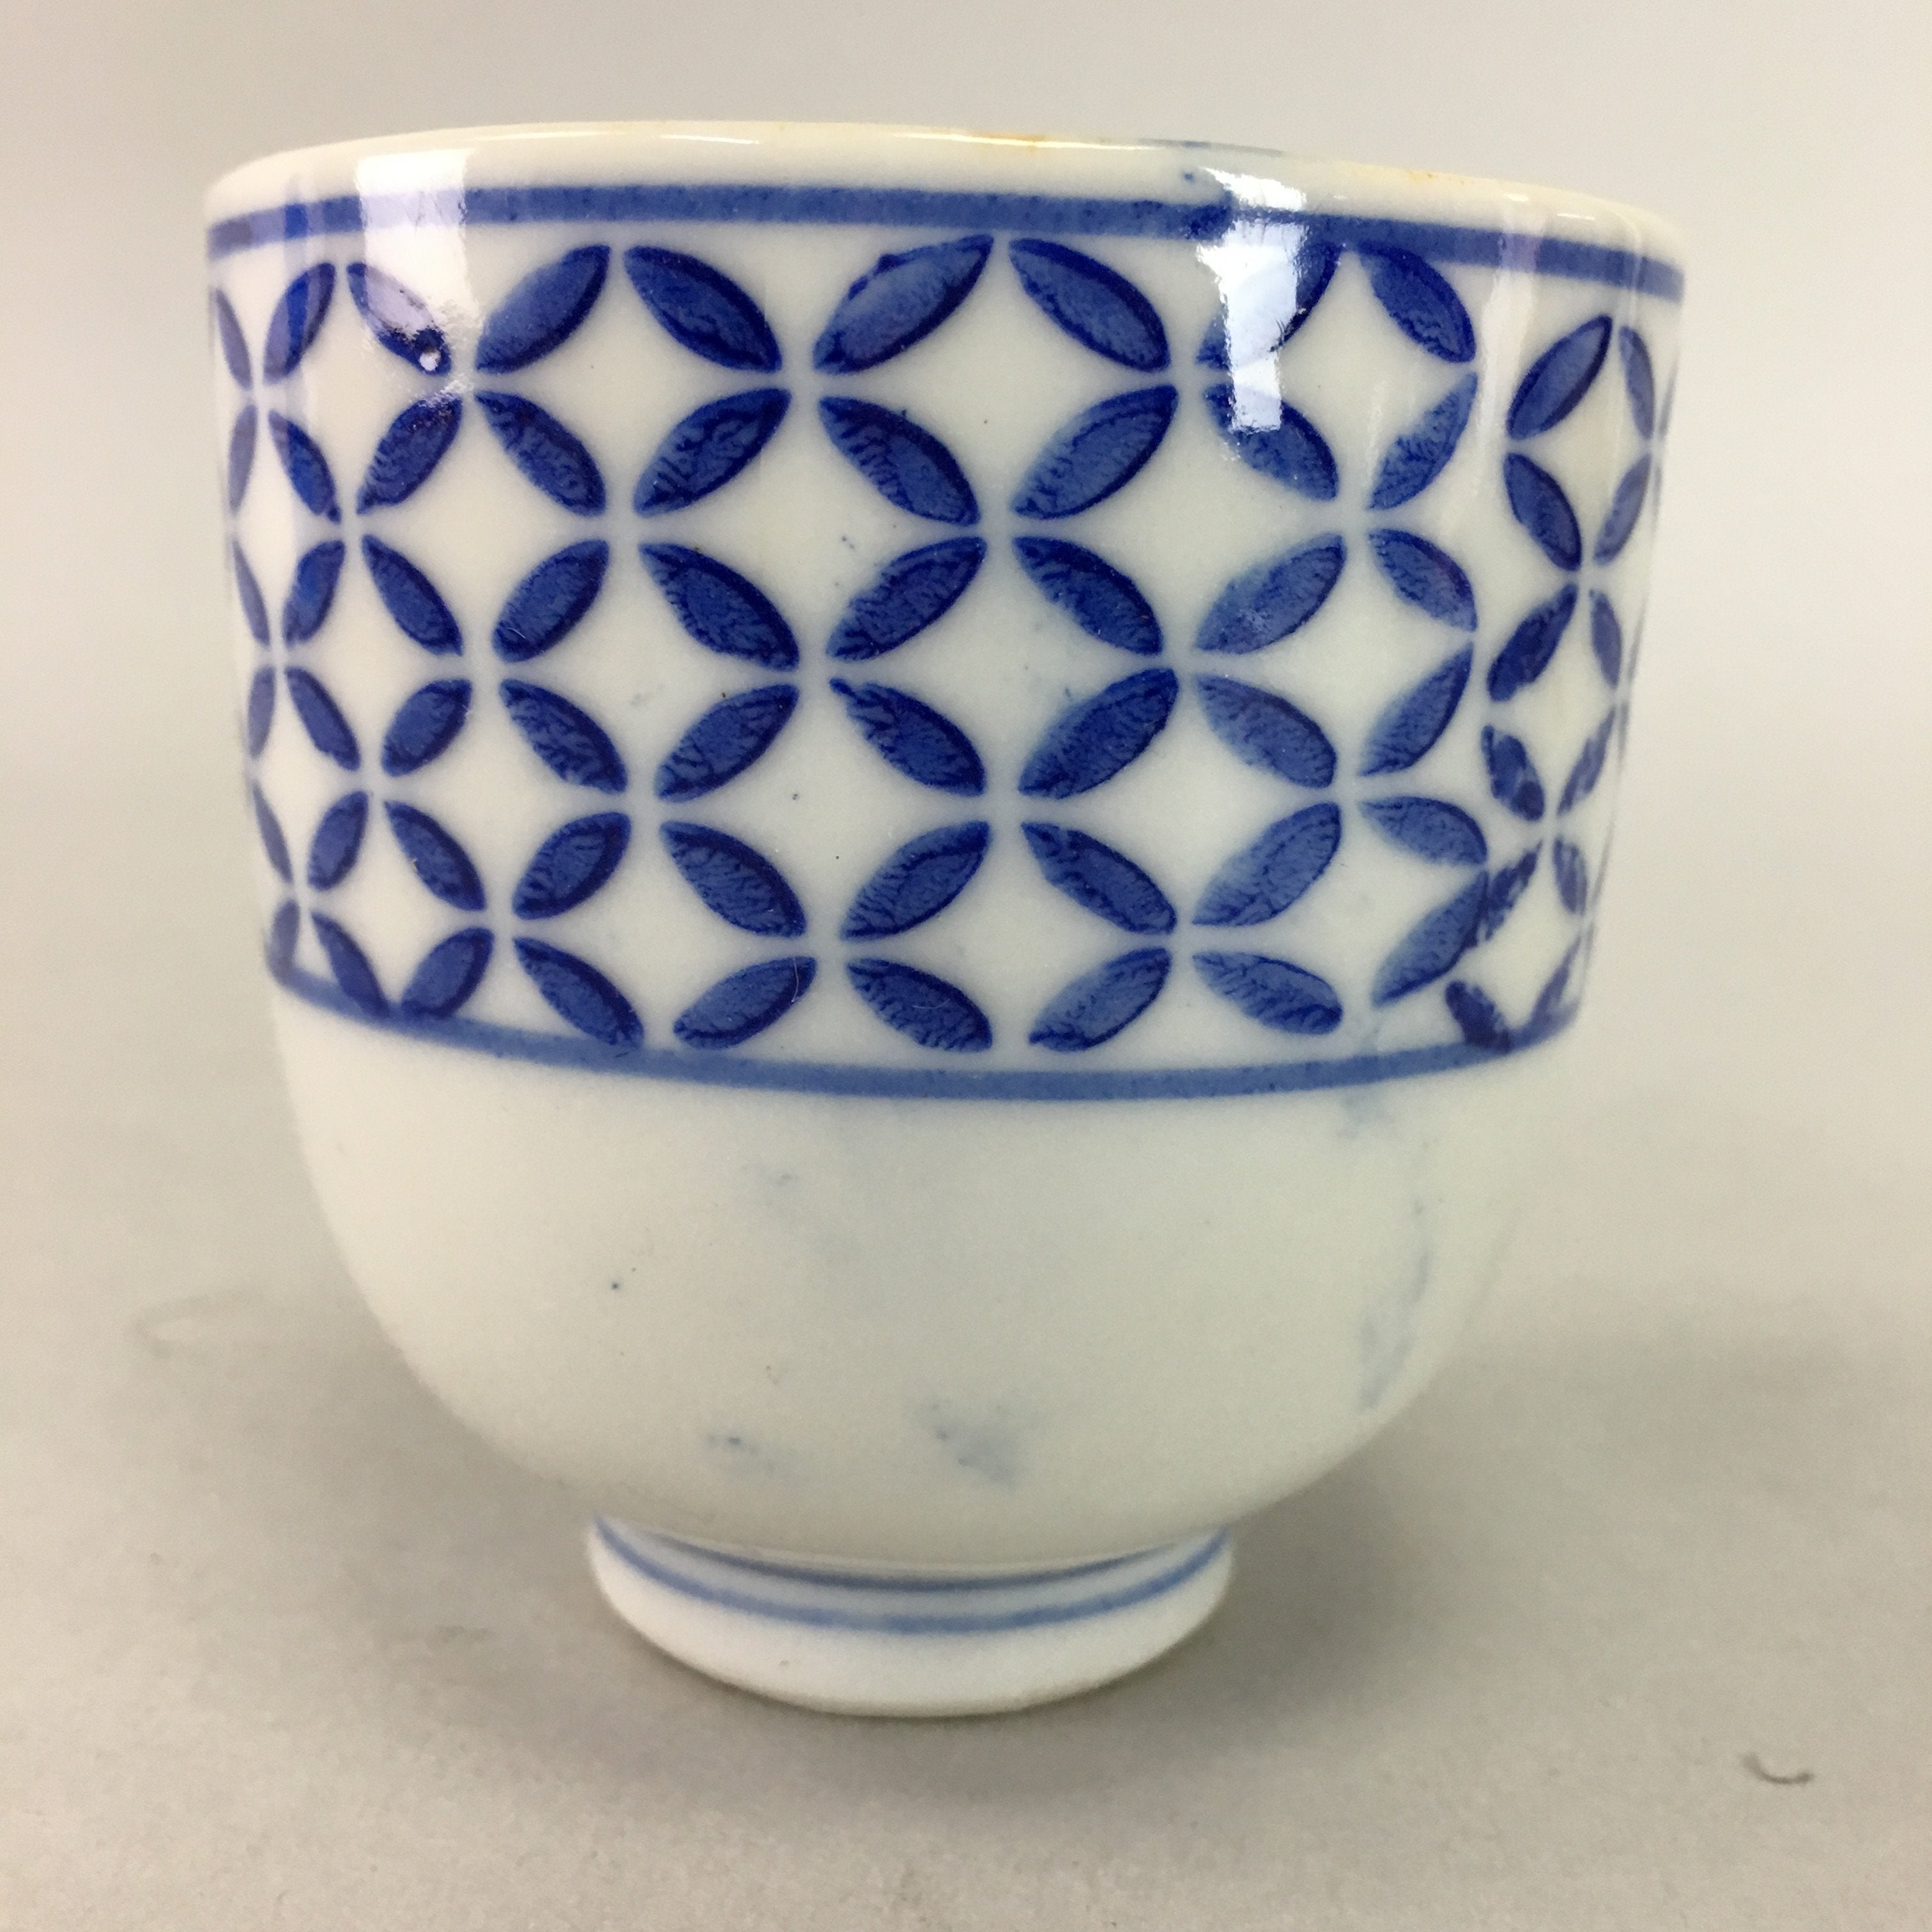 Japanese Porcelain Teacup Vtg Yunomi Sometsuke Blue White Shippo Sencha TC9